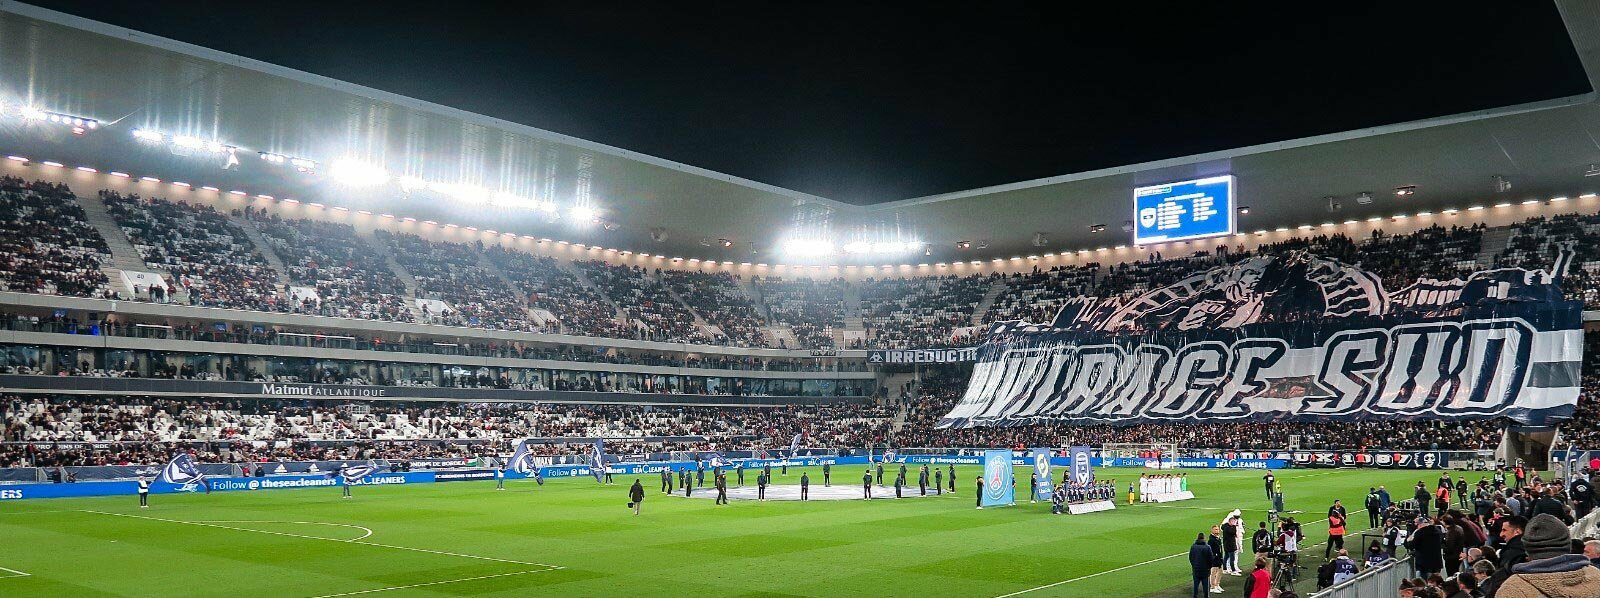 ❗RMC Sport, O Girondins de Bordeaux - Planeta Futebol Mz